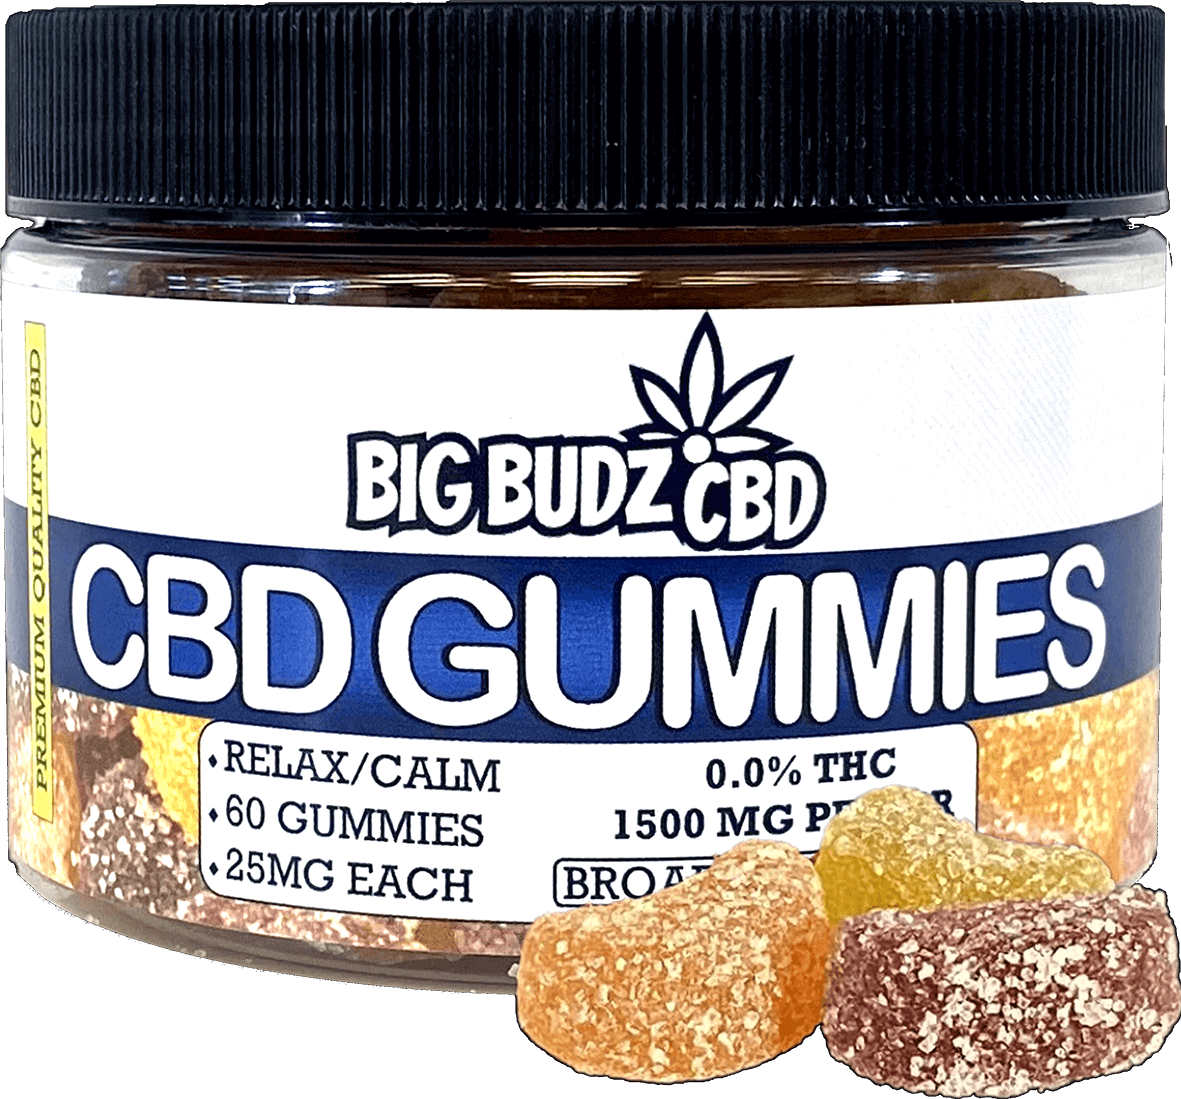 Big Budz CBD (Big Buds CBD) CBD Gummies